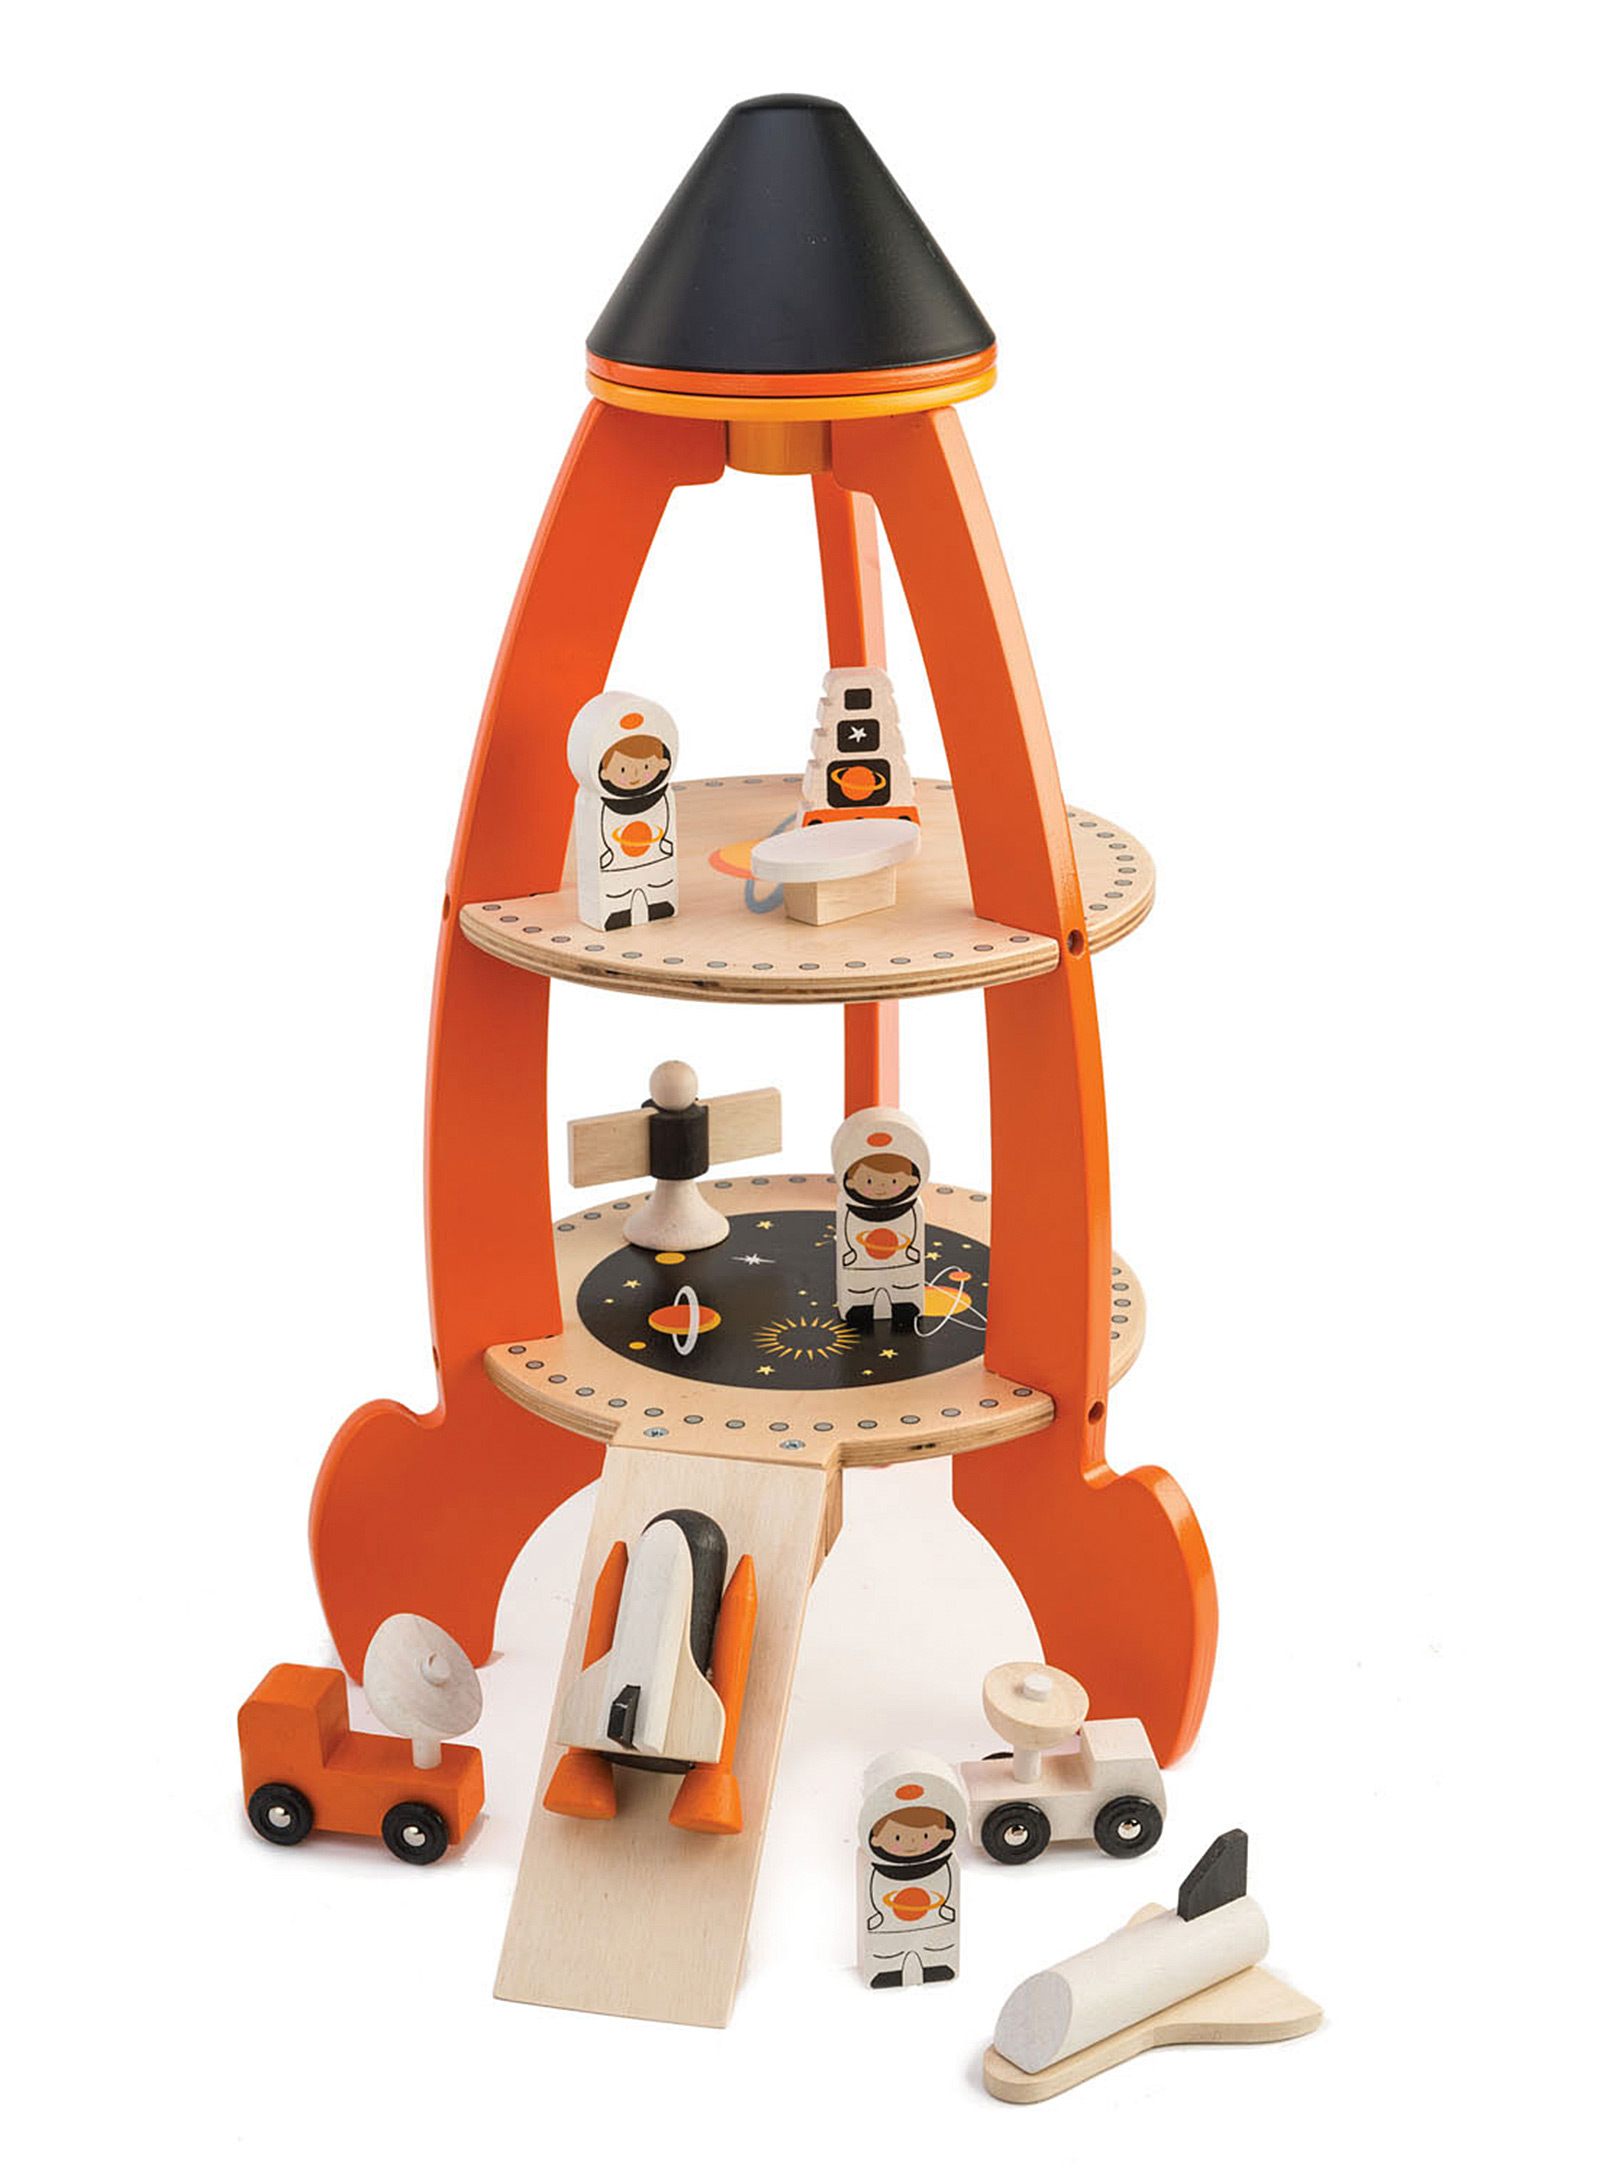 Tender Leaf Toys - Wooden rocket and crew 11-piece set